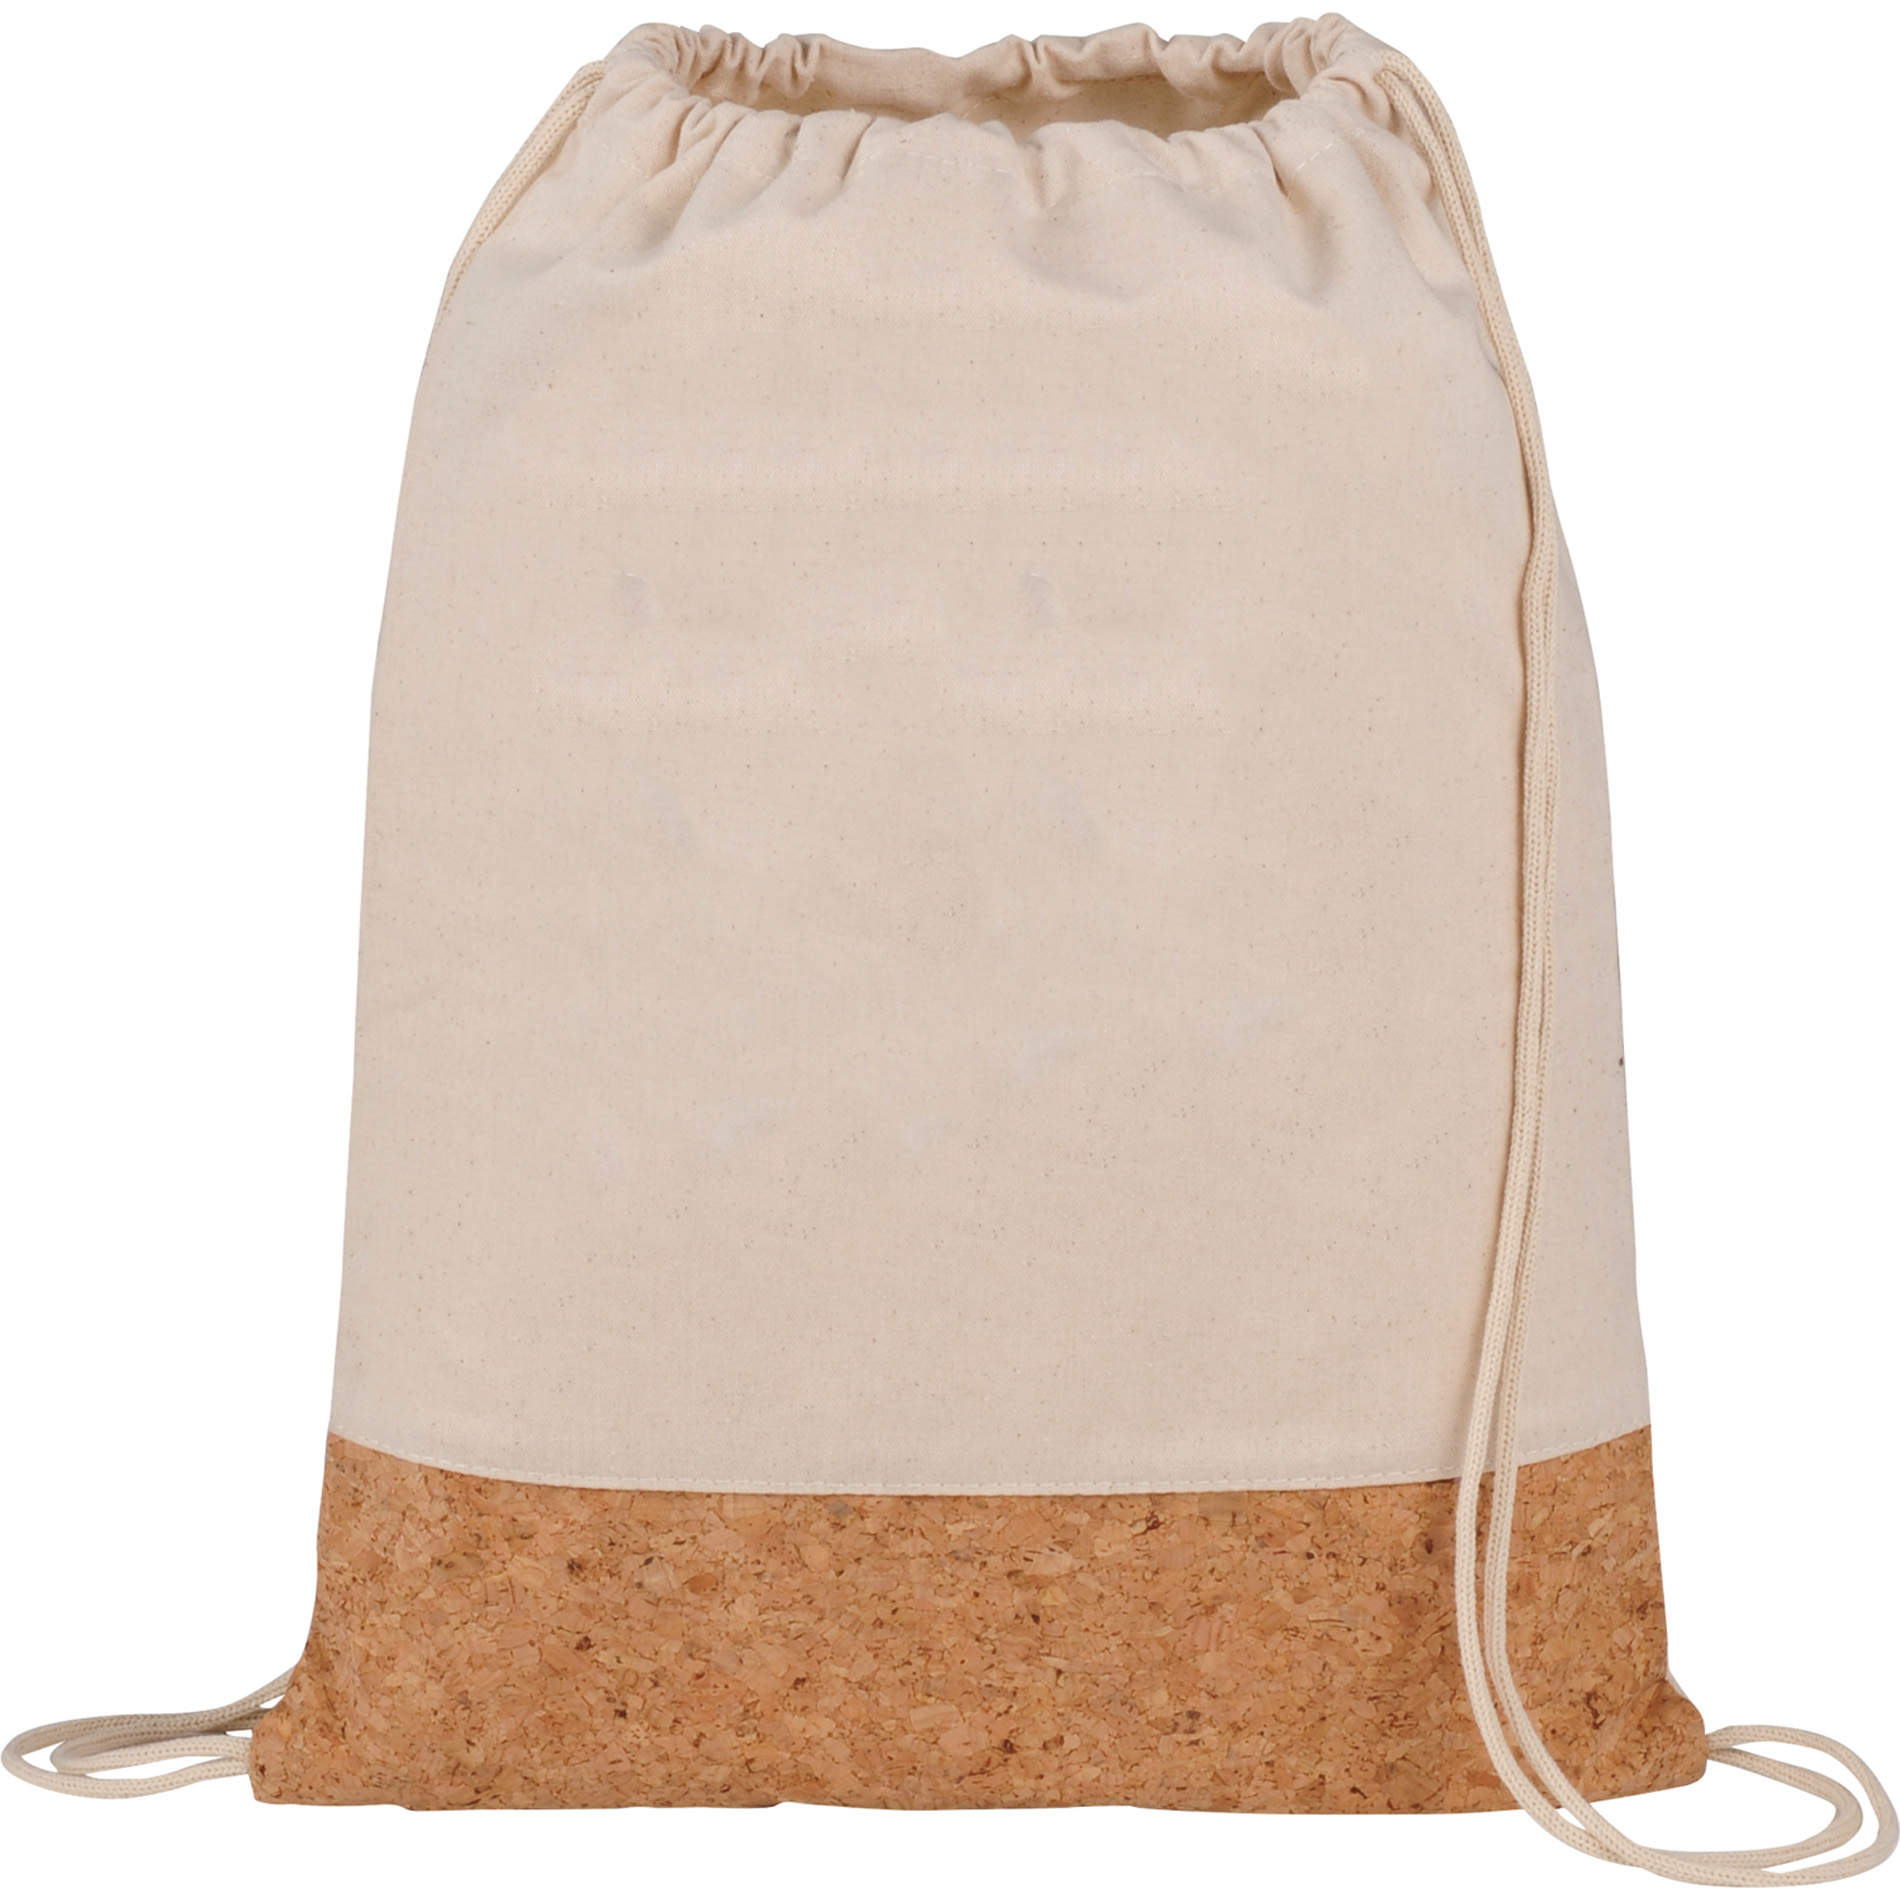 LEEDS 3005-19 - Cotton and Cork Drawstring Bag